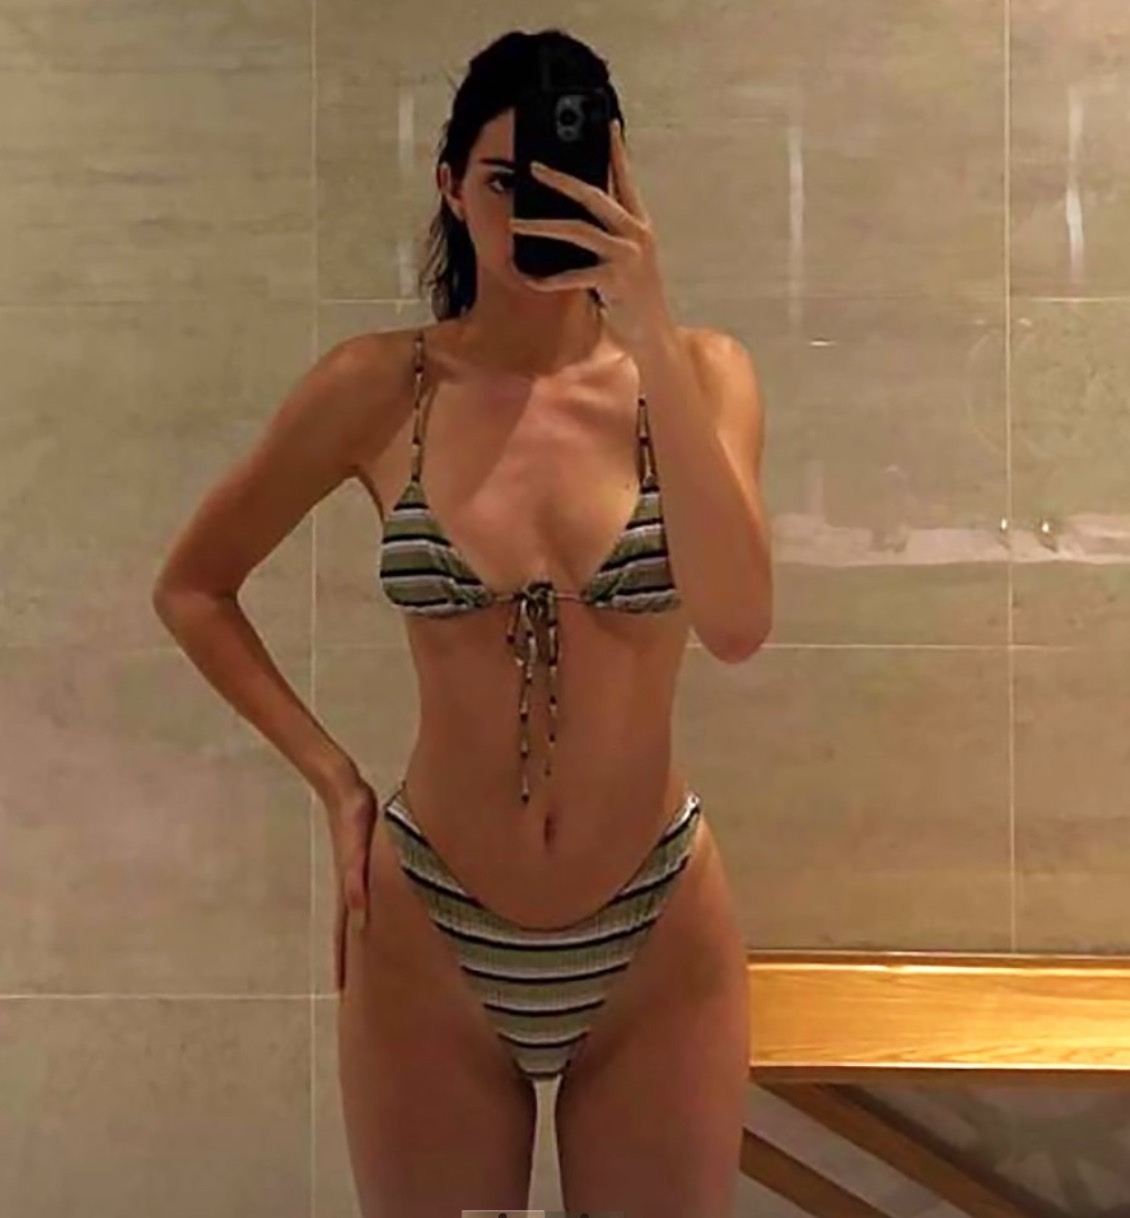 Kendall Jenner Wore an Itty-Bitty Orange Thong Bikini in Her First